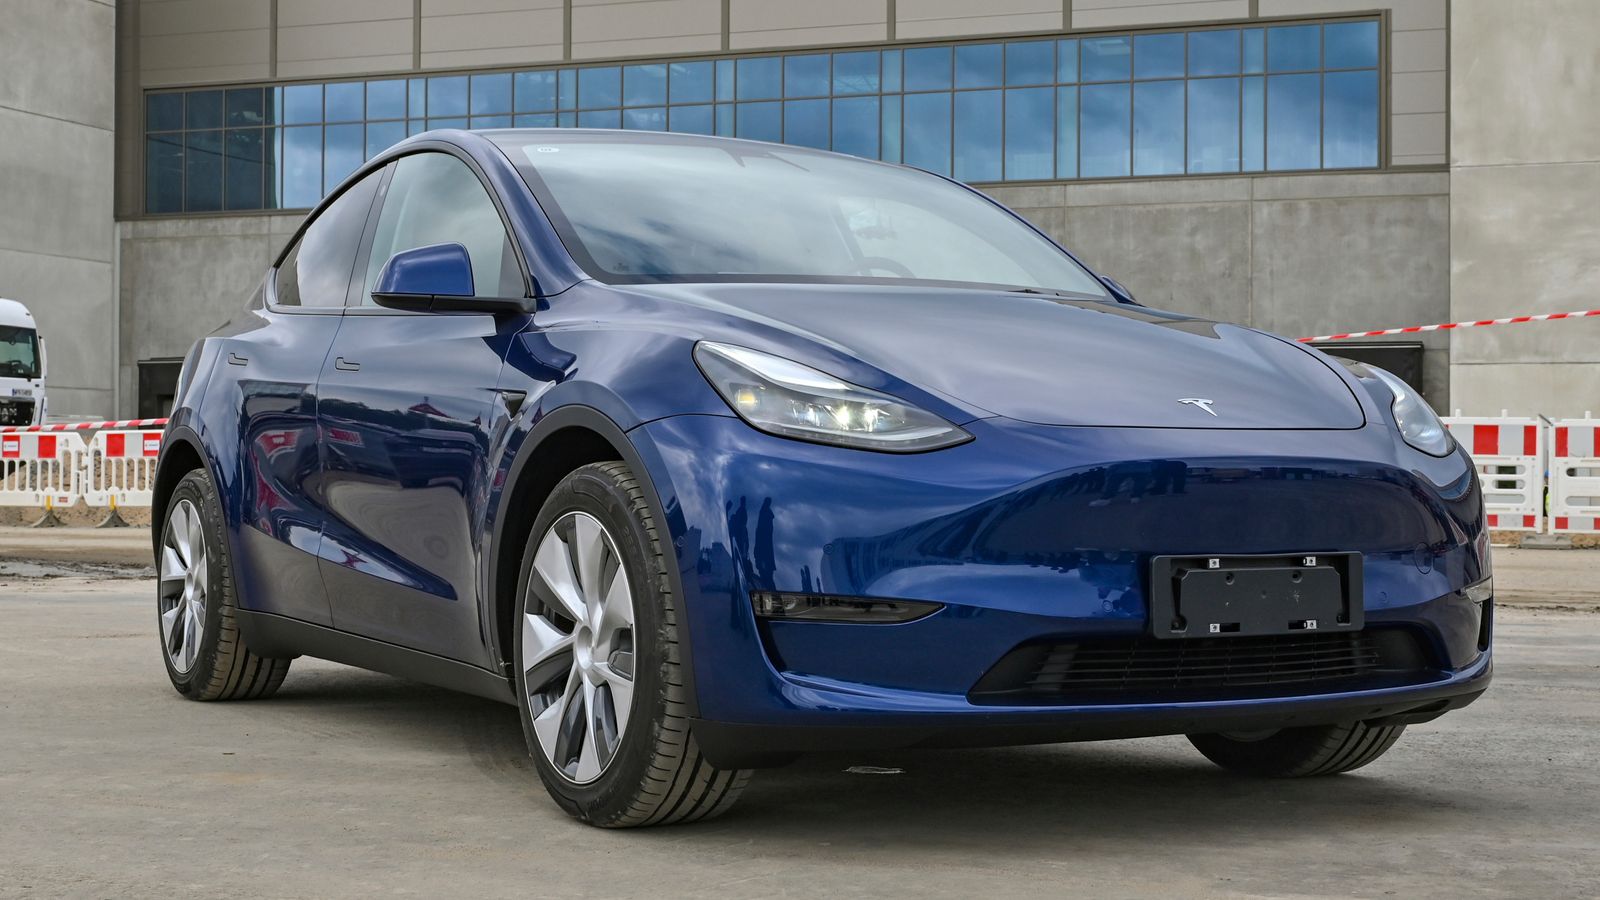 Record output for Tesla but deliveries still below estimates